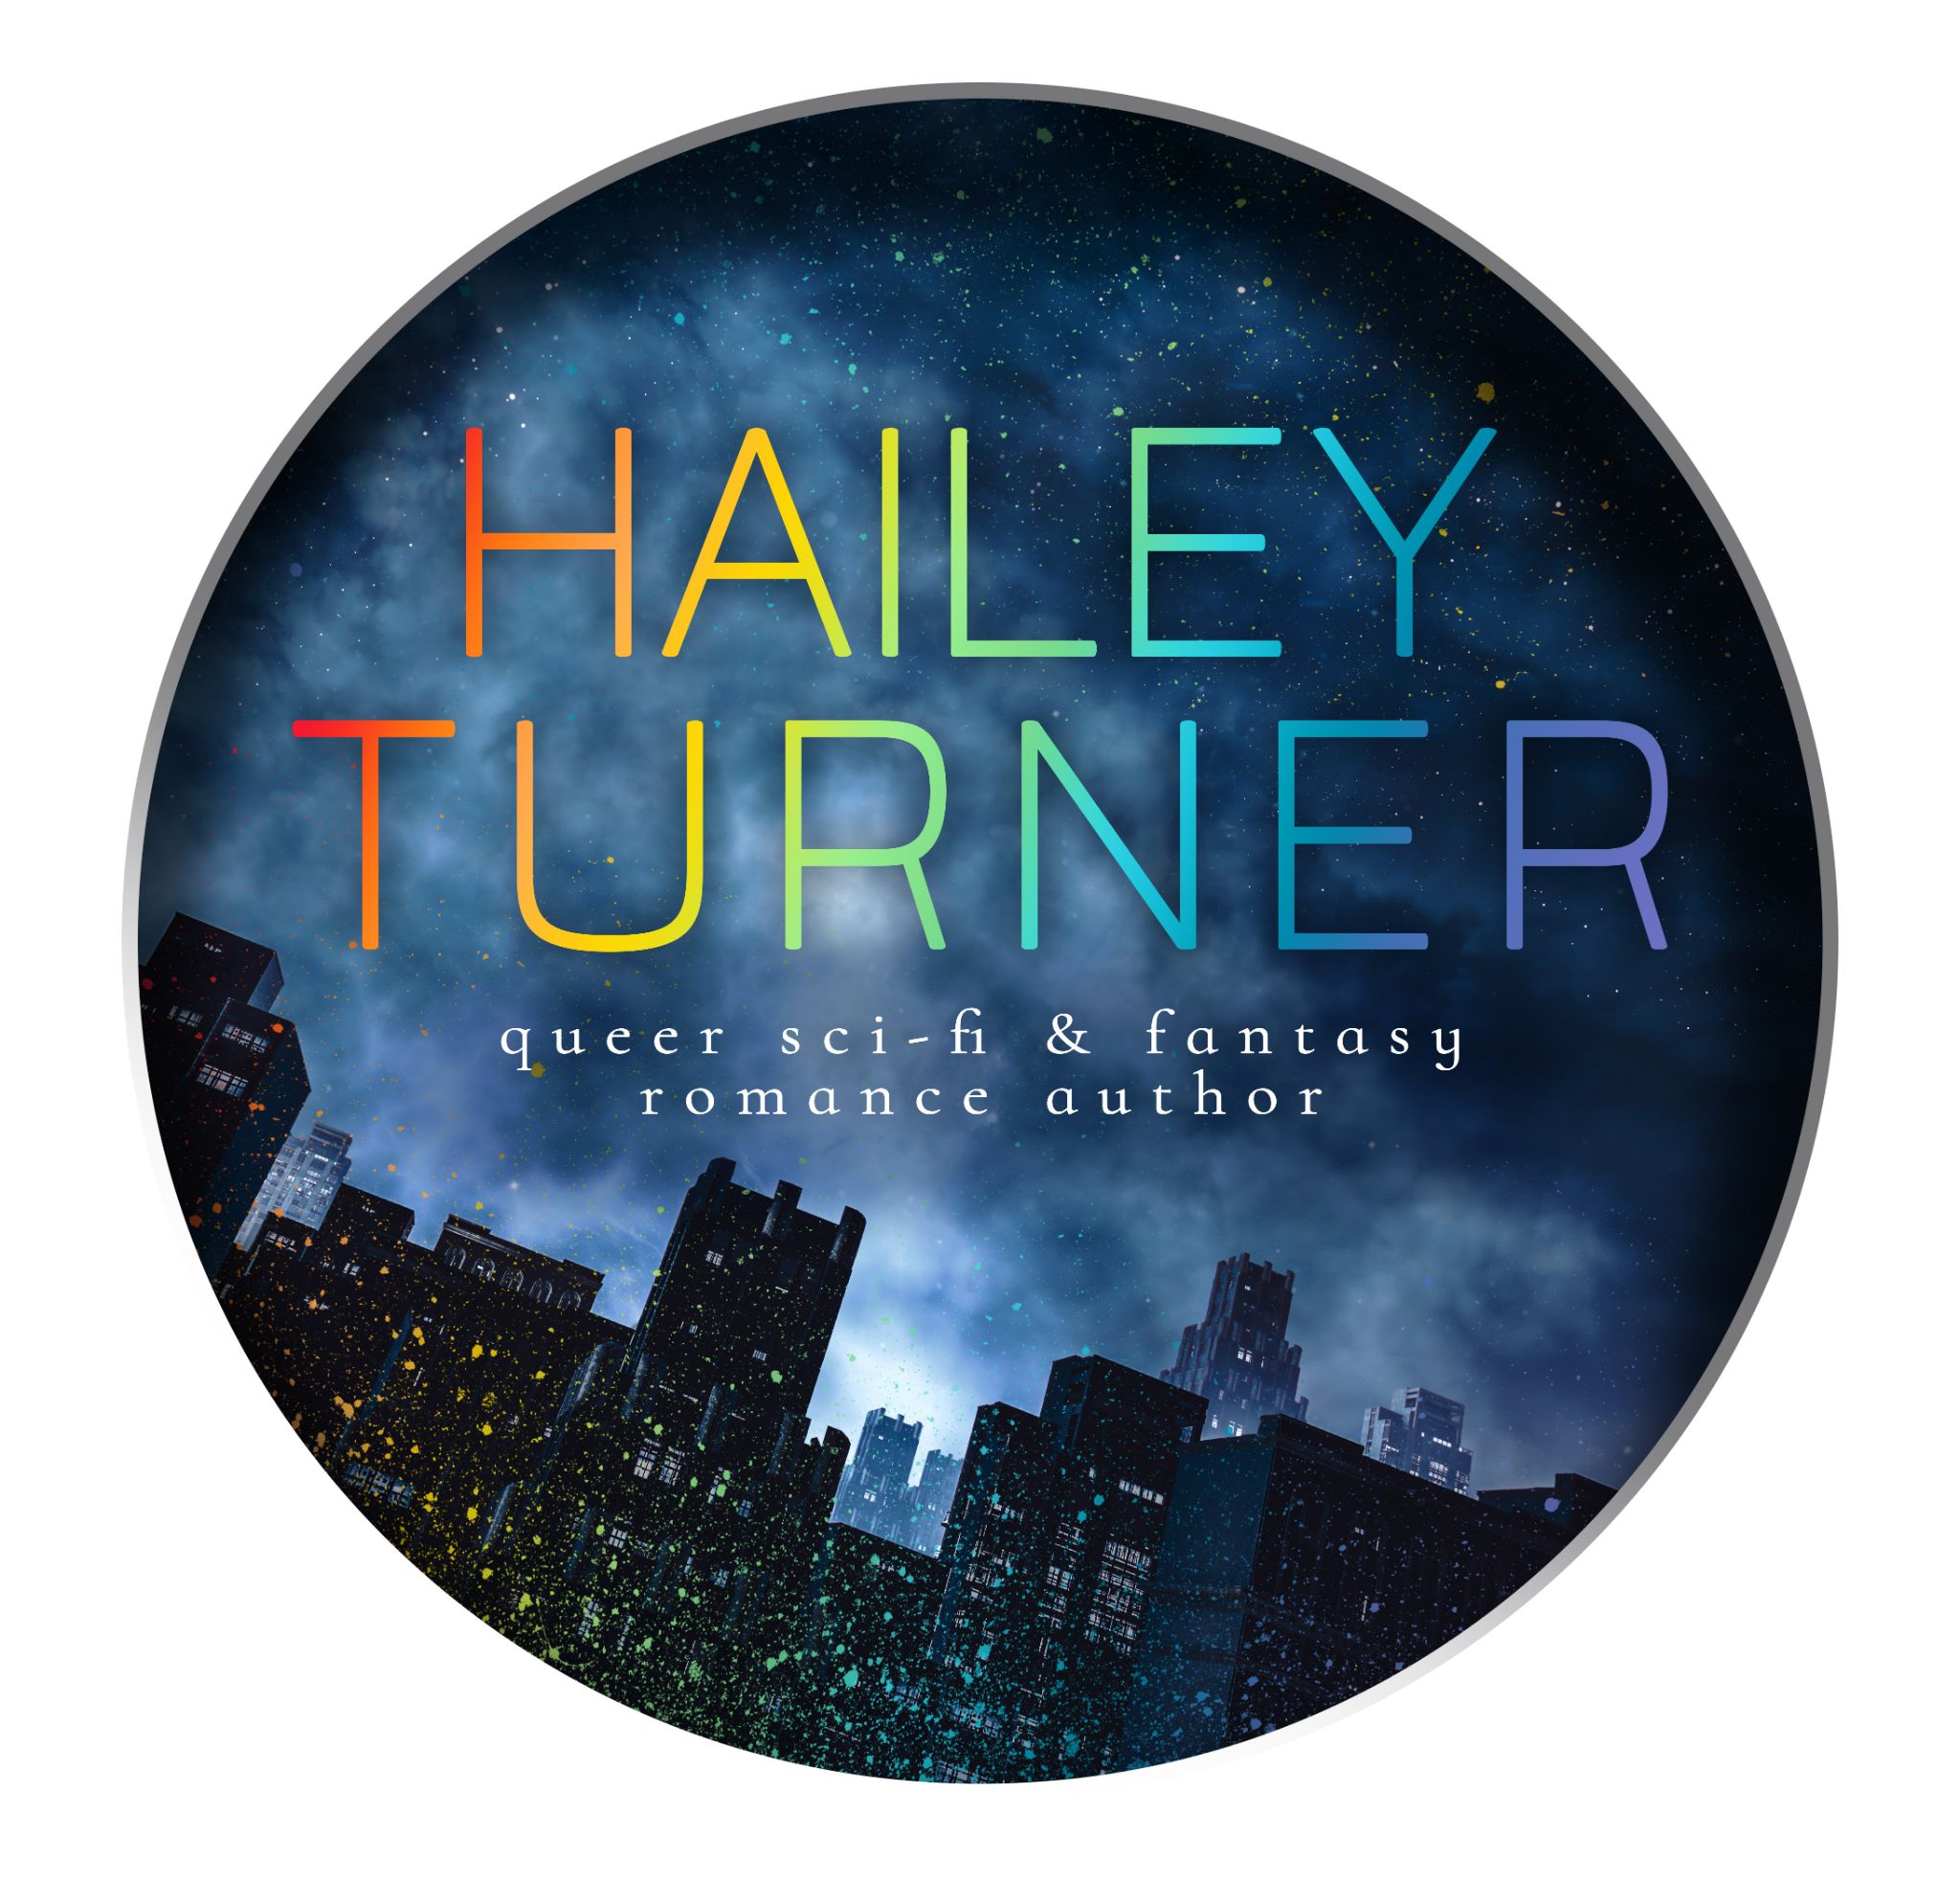 Hailey Turner, queer sci-fi & fantasy romance author.